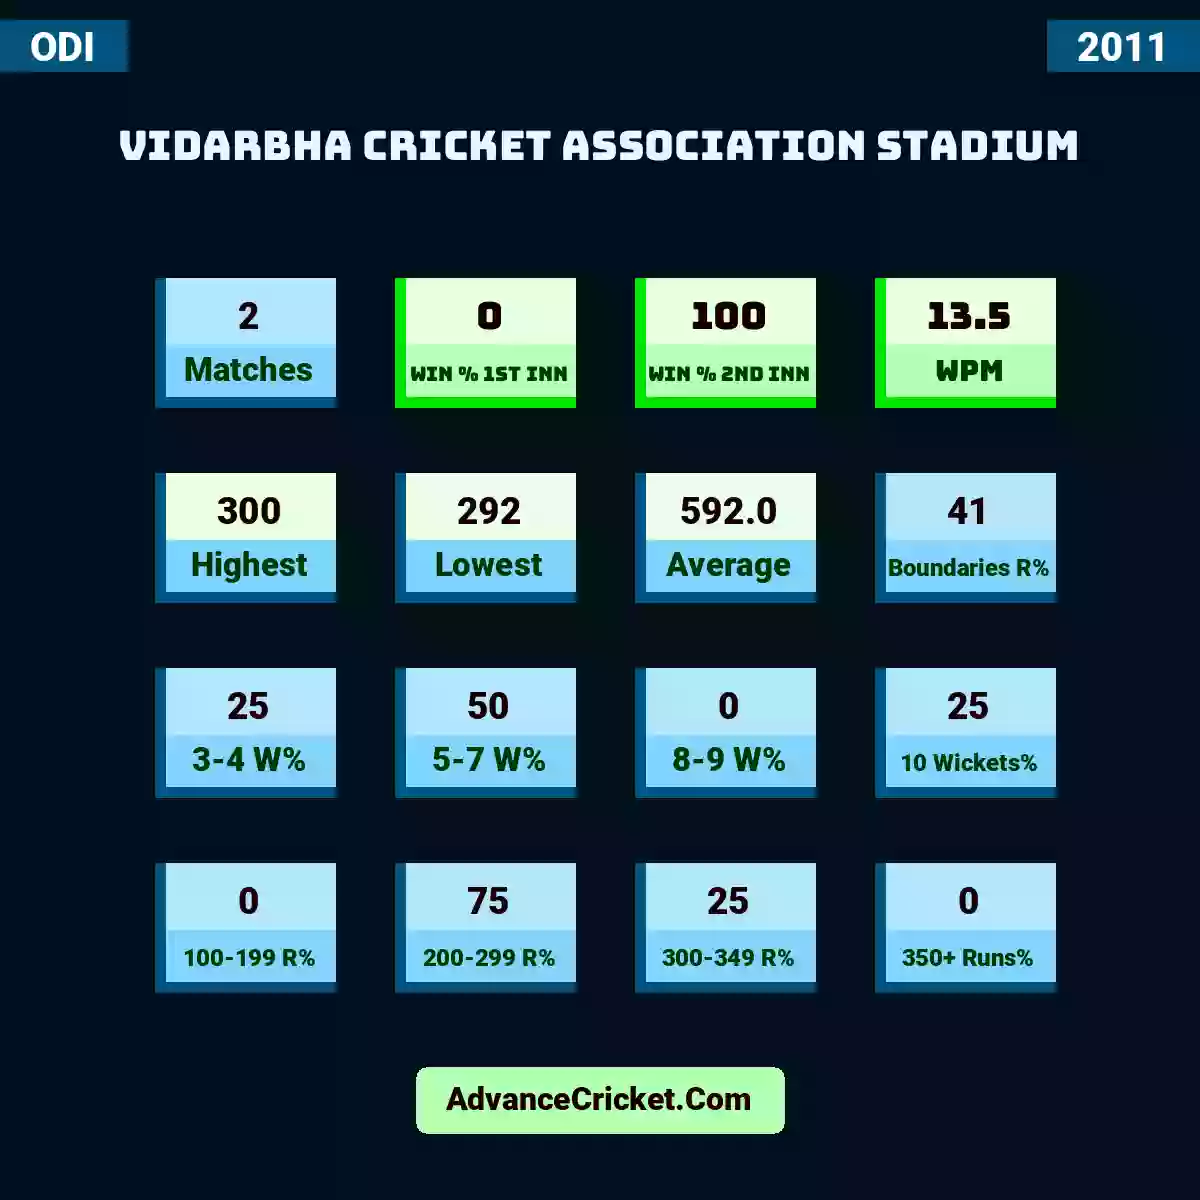 Image showing Vidarbha Cricket Association Stadium with Matches: 2, Win % 1st Inn: 0, Win % 2nd Inn: 100, WPM: 13.5, Highest: 300, Lowest: 292, Average: 592.0, Boundaries R%: 41, 3-4 W%: 25, 5-7 W%: 50, 8-9 W%: 0, 10 Wickets%: 25, 100-199 R%: 0, 200-299 R%: 75, 300-349 R%: 25, 350+ Runs%: 0.